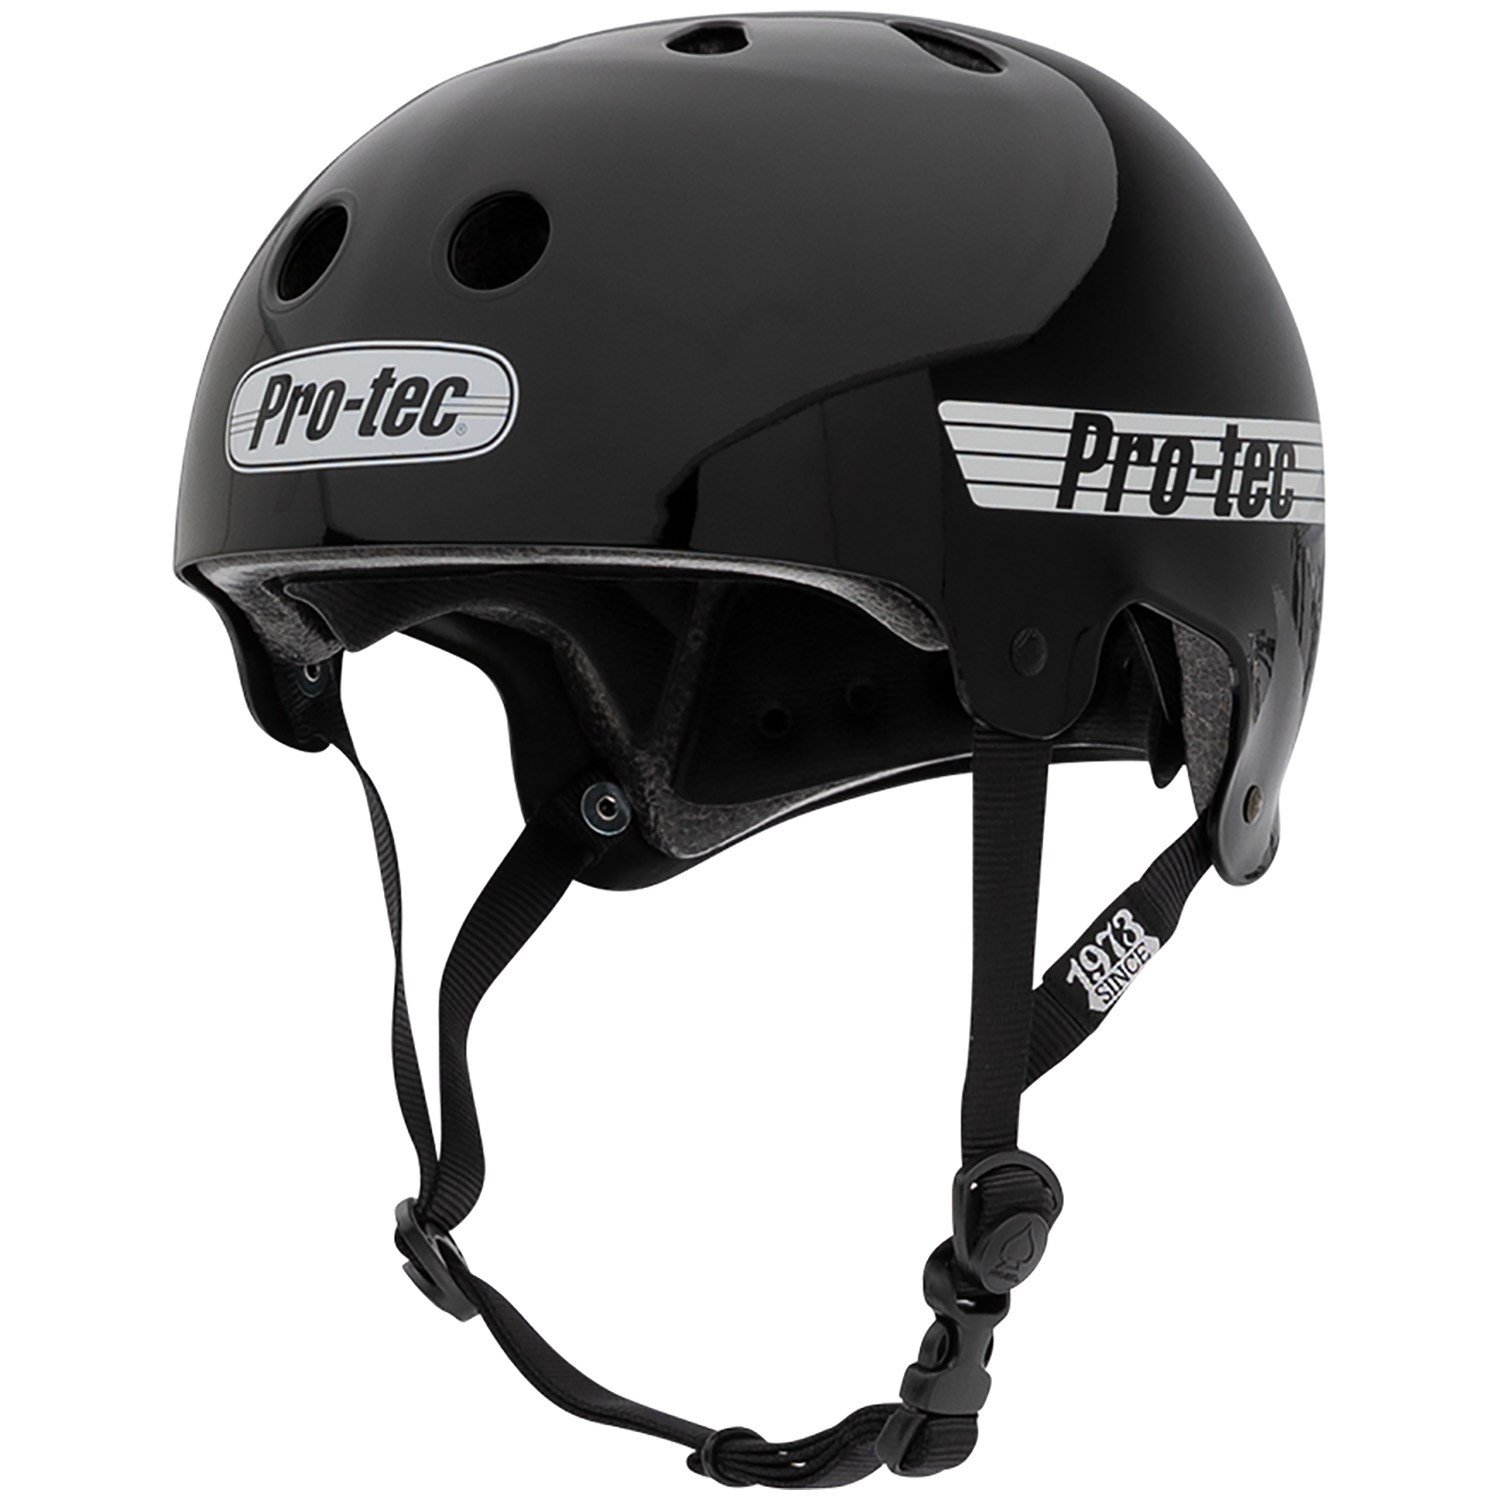 Pro-Tec Helmet Skeleton Key Old School Cert Skateboard Helmet Unisex Adult 